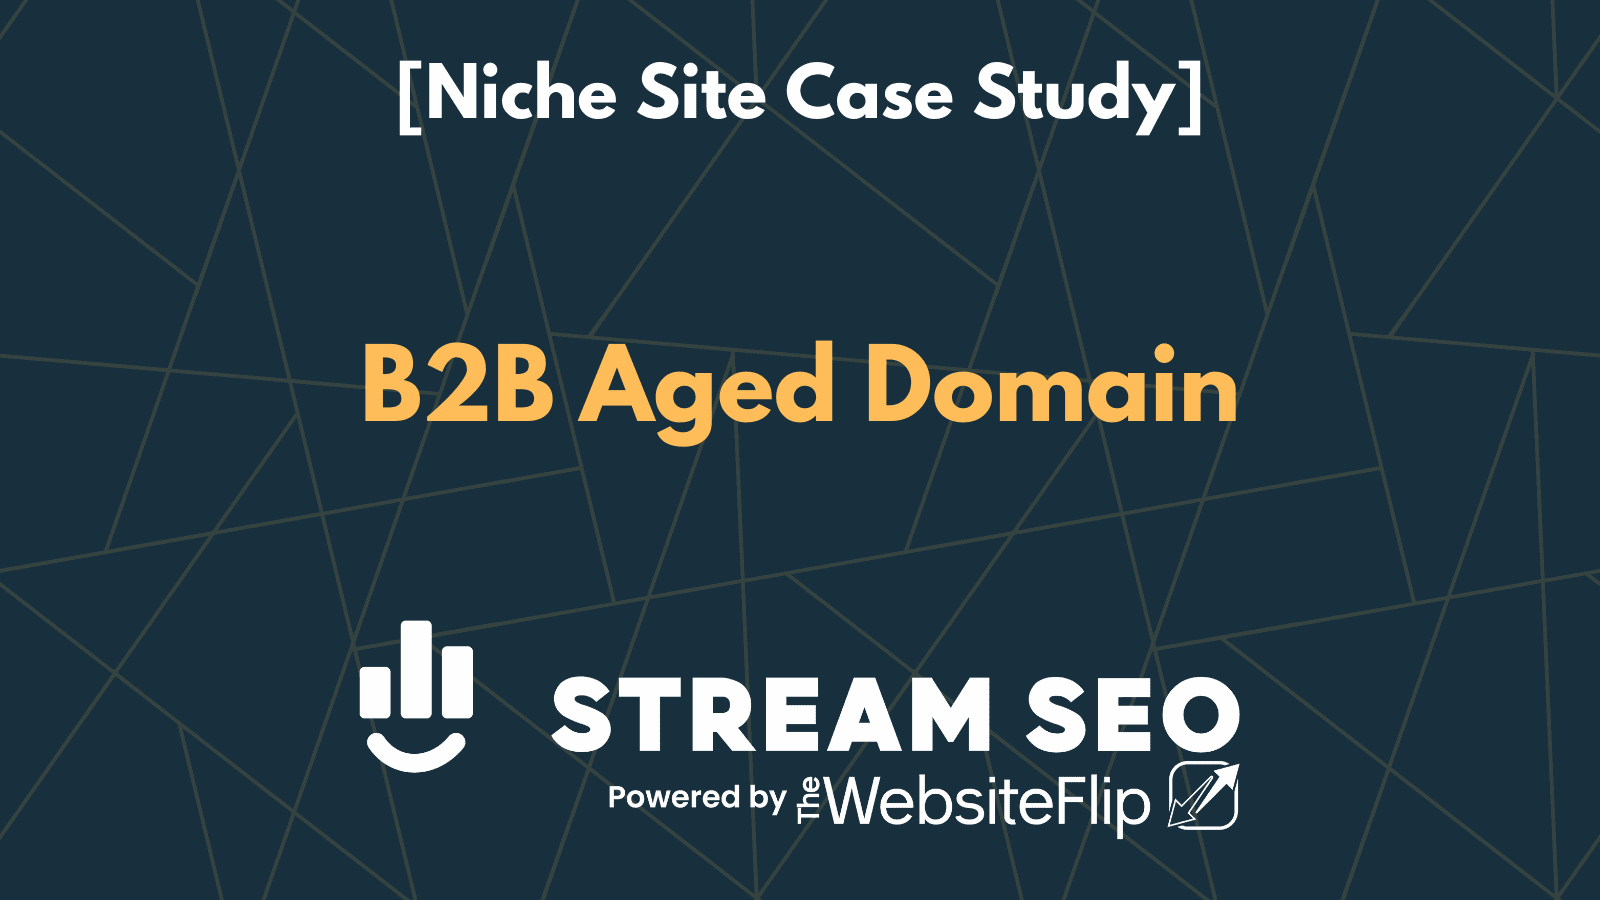 B2B Aged Domain Niche Site Case Study